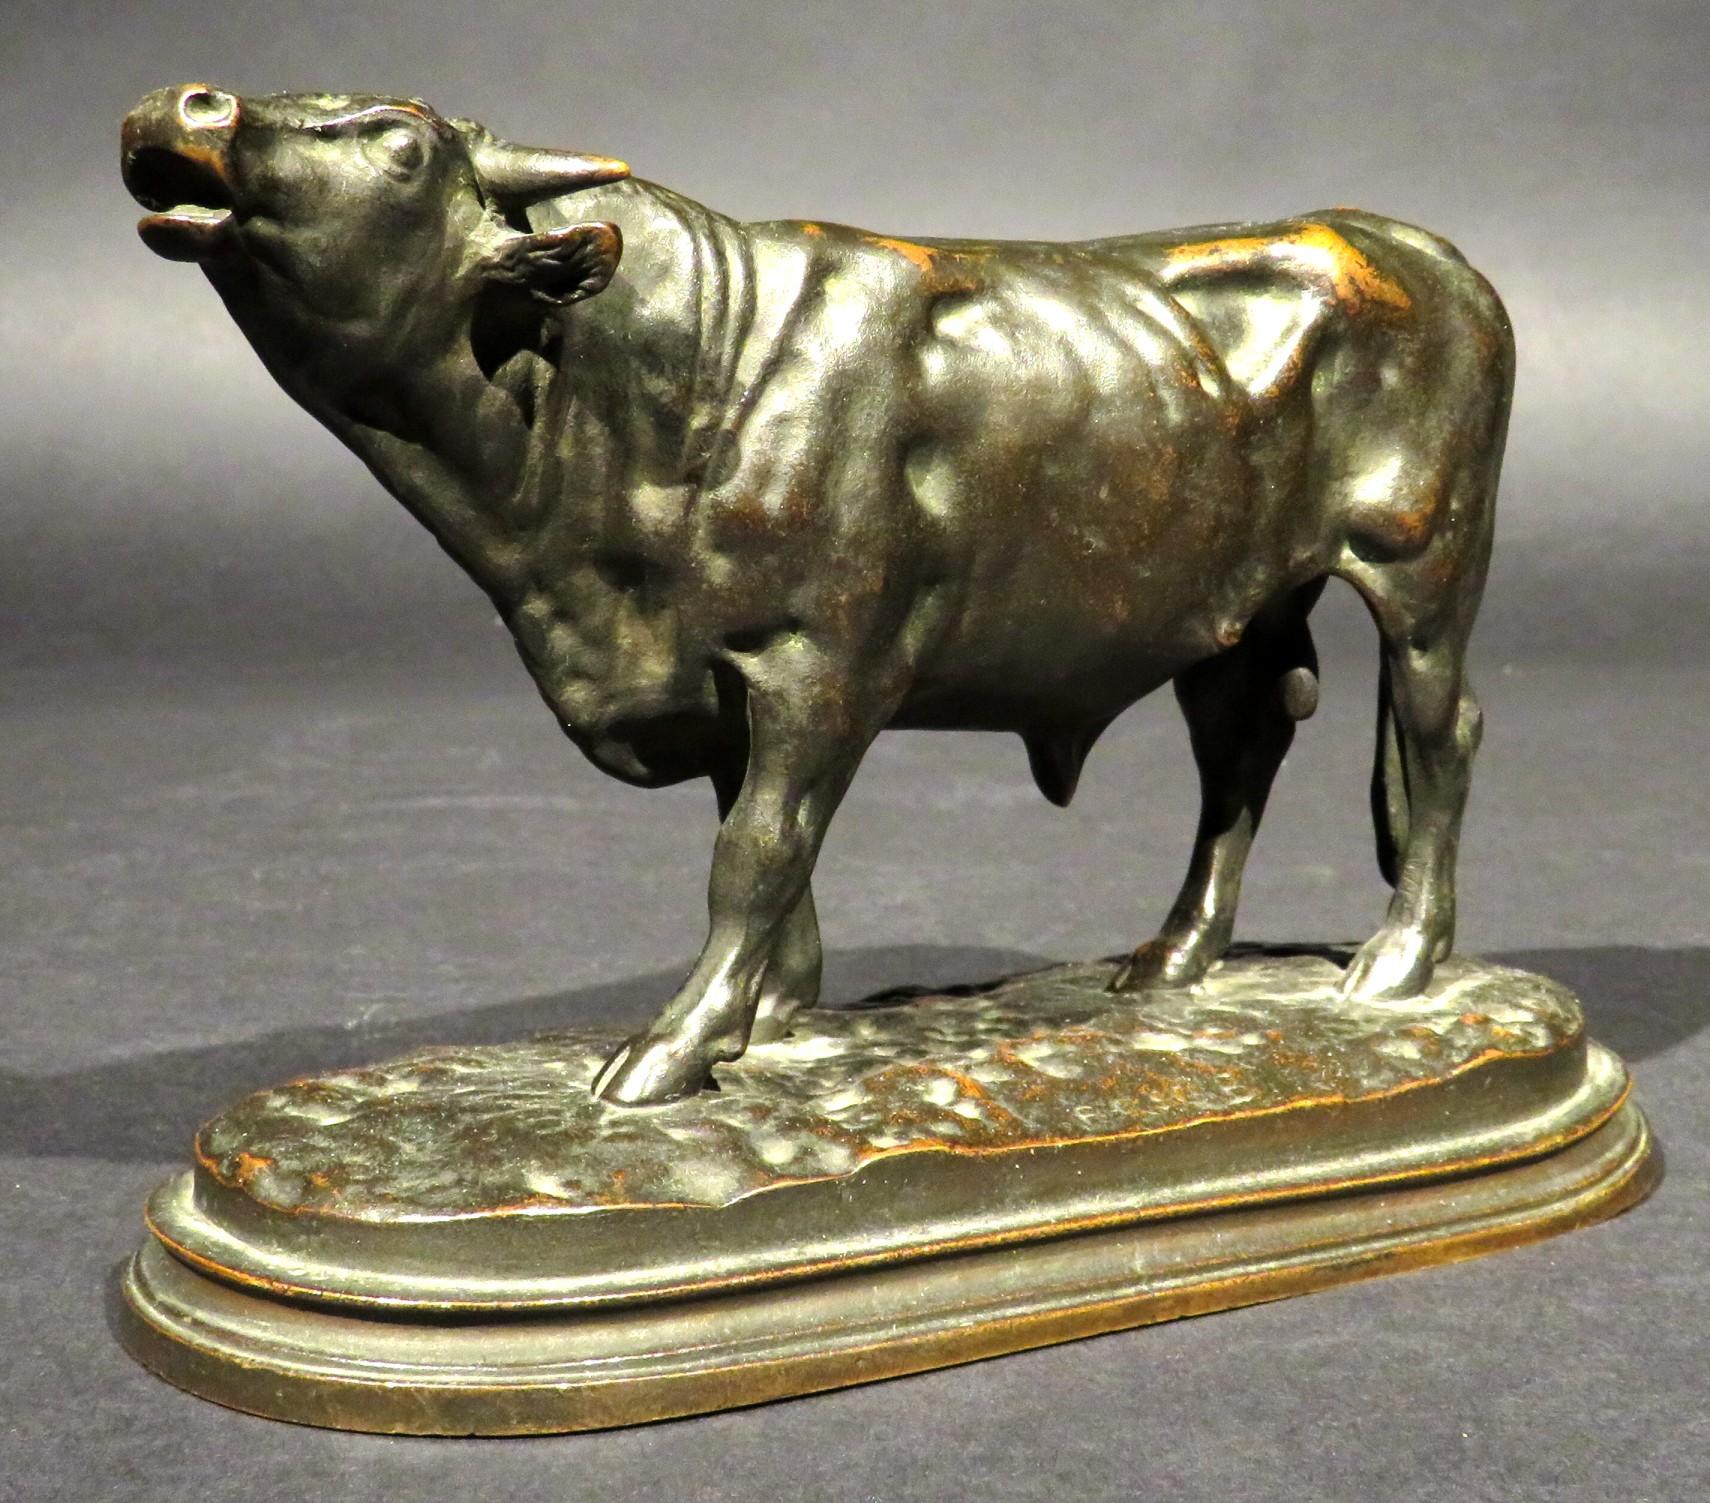 Beaux Arts A Fine Animalier School Bronze Figure of a Bull, After Rosa Bonheur (1822-1899) For Sale